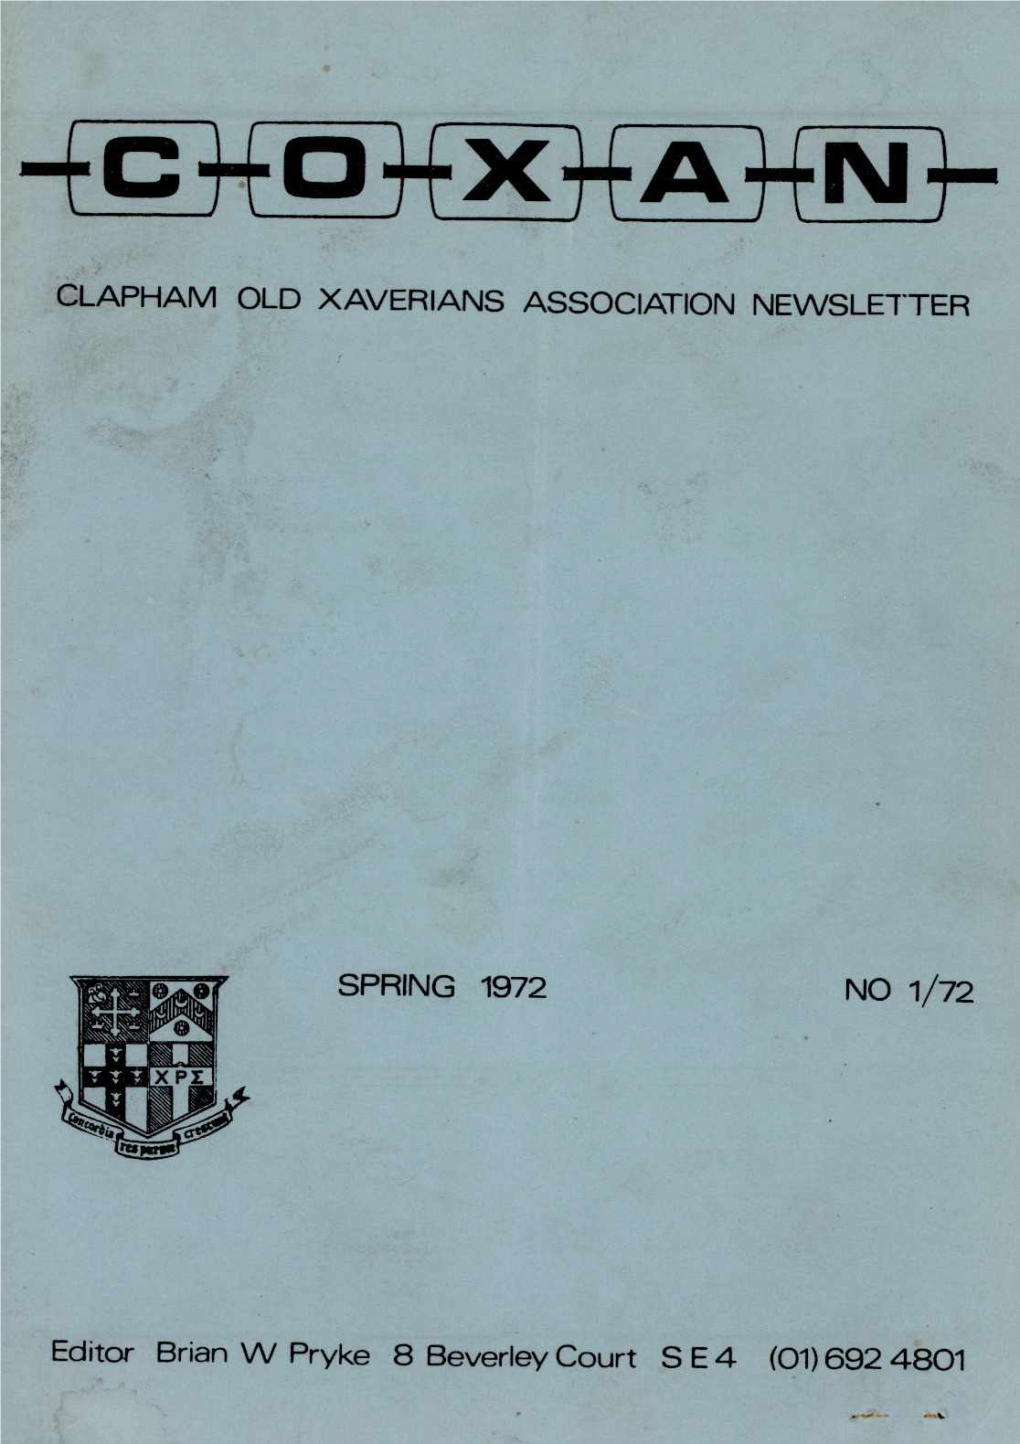 CLAPHAM OLD XAVERIANS ASSOCIATION NEWSLETTER SPRING 1972 NO 1/72 Editor Brian W Pryke 8 Beverley Court S E 4 (01) 692 4801